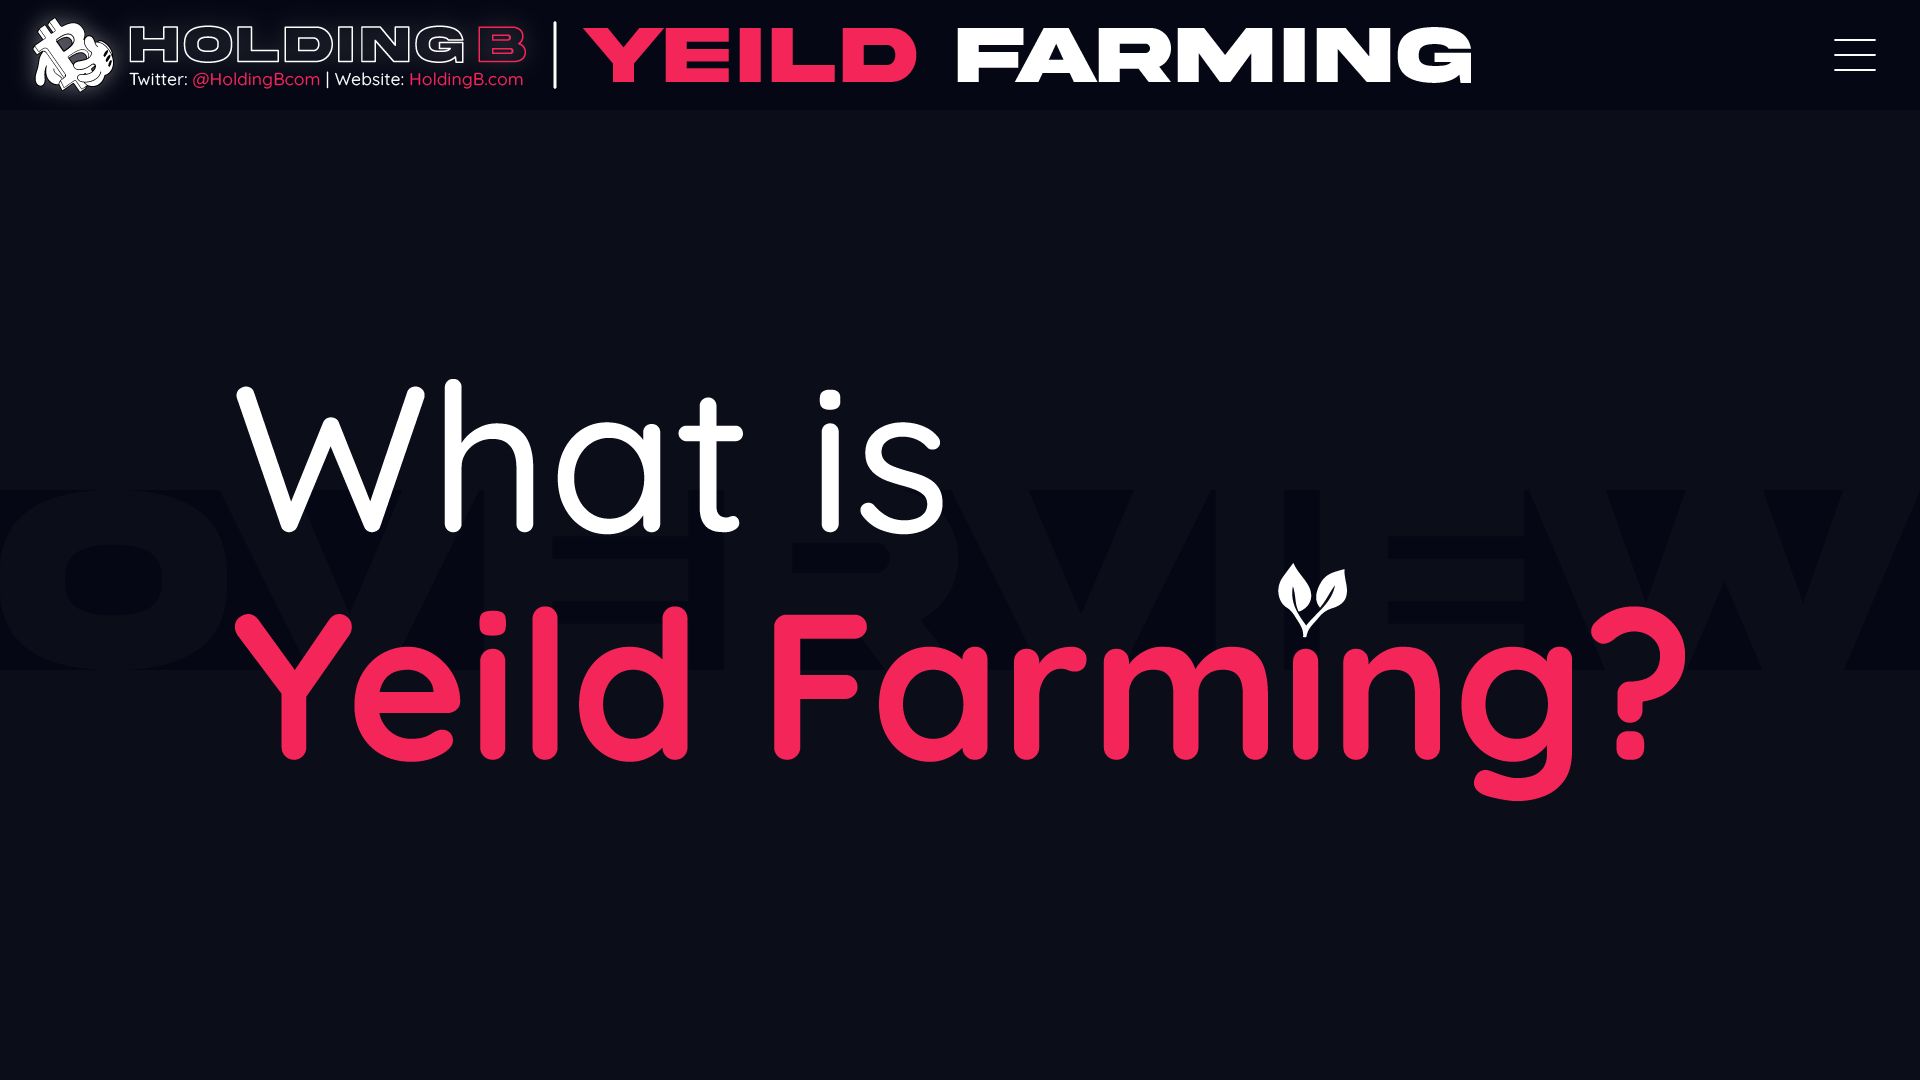 YEILD FARMING – AN IMPORTANT CONCEPT